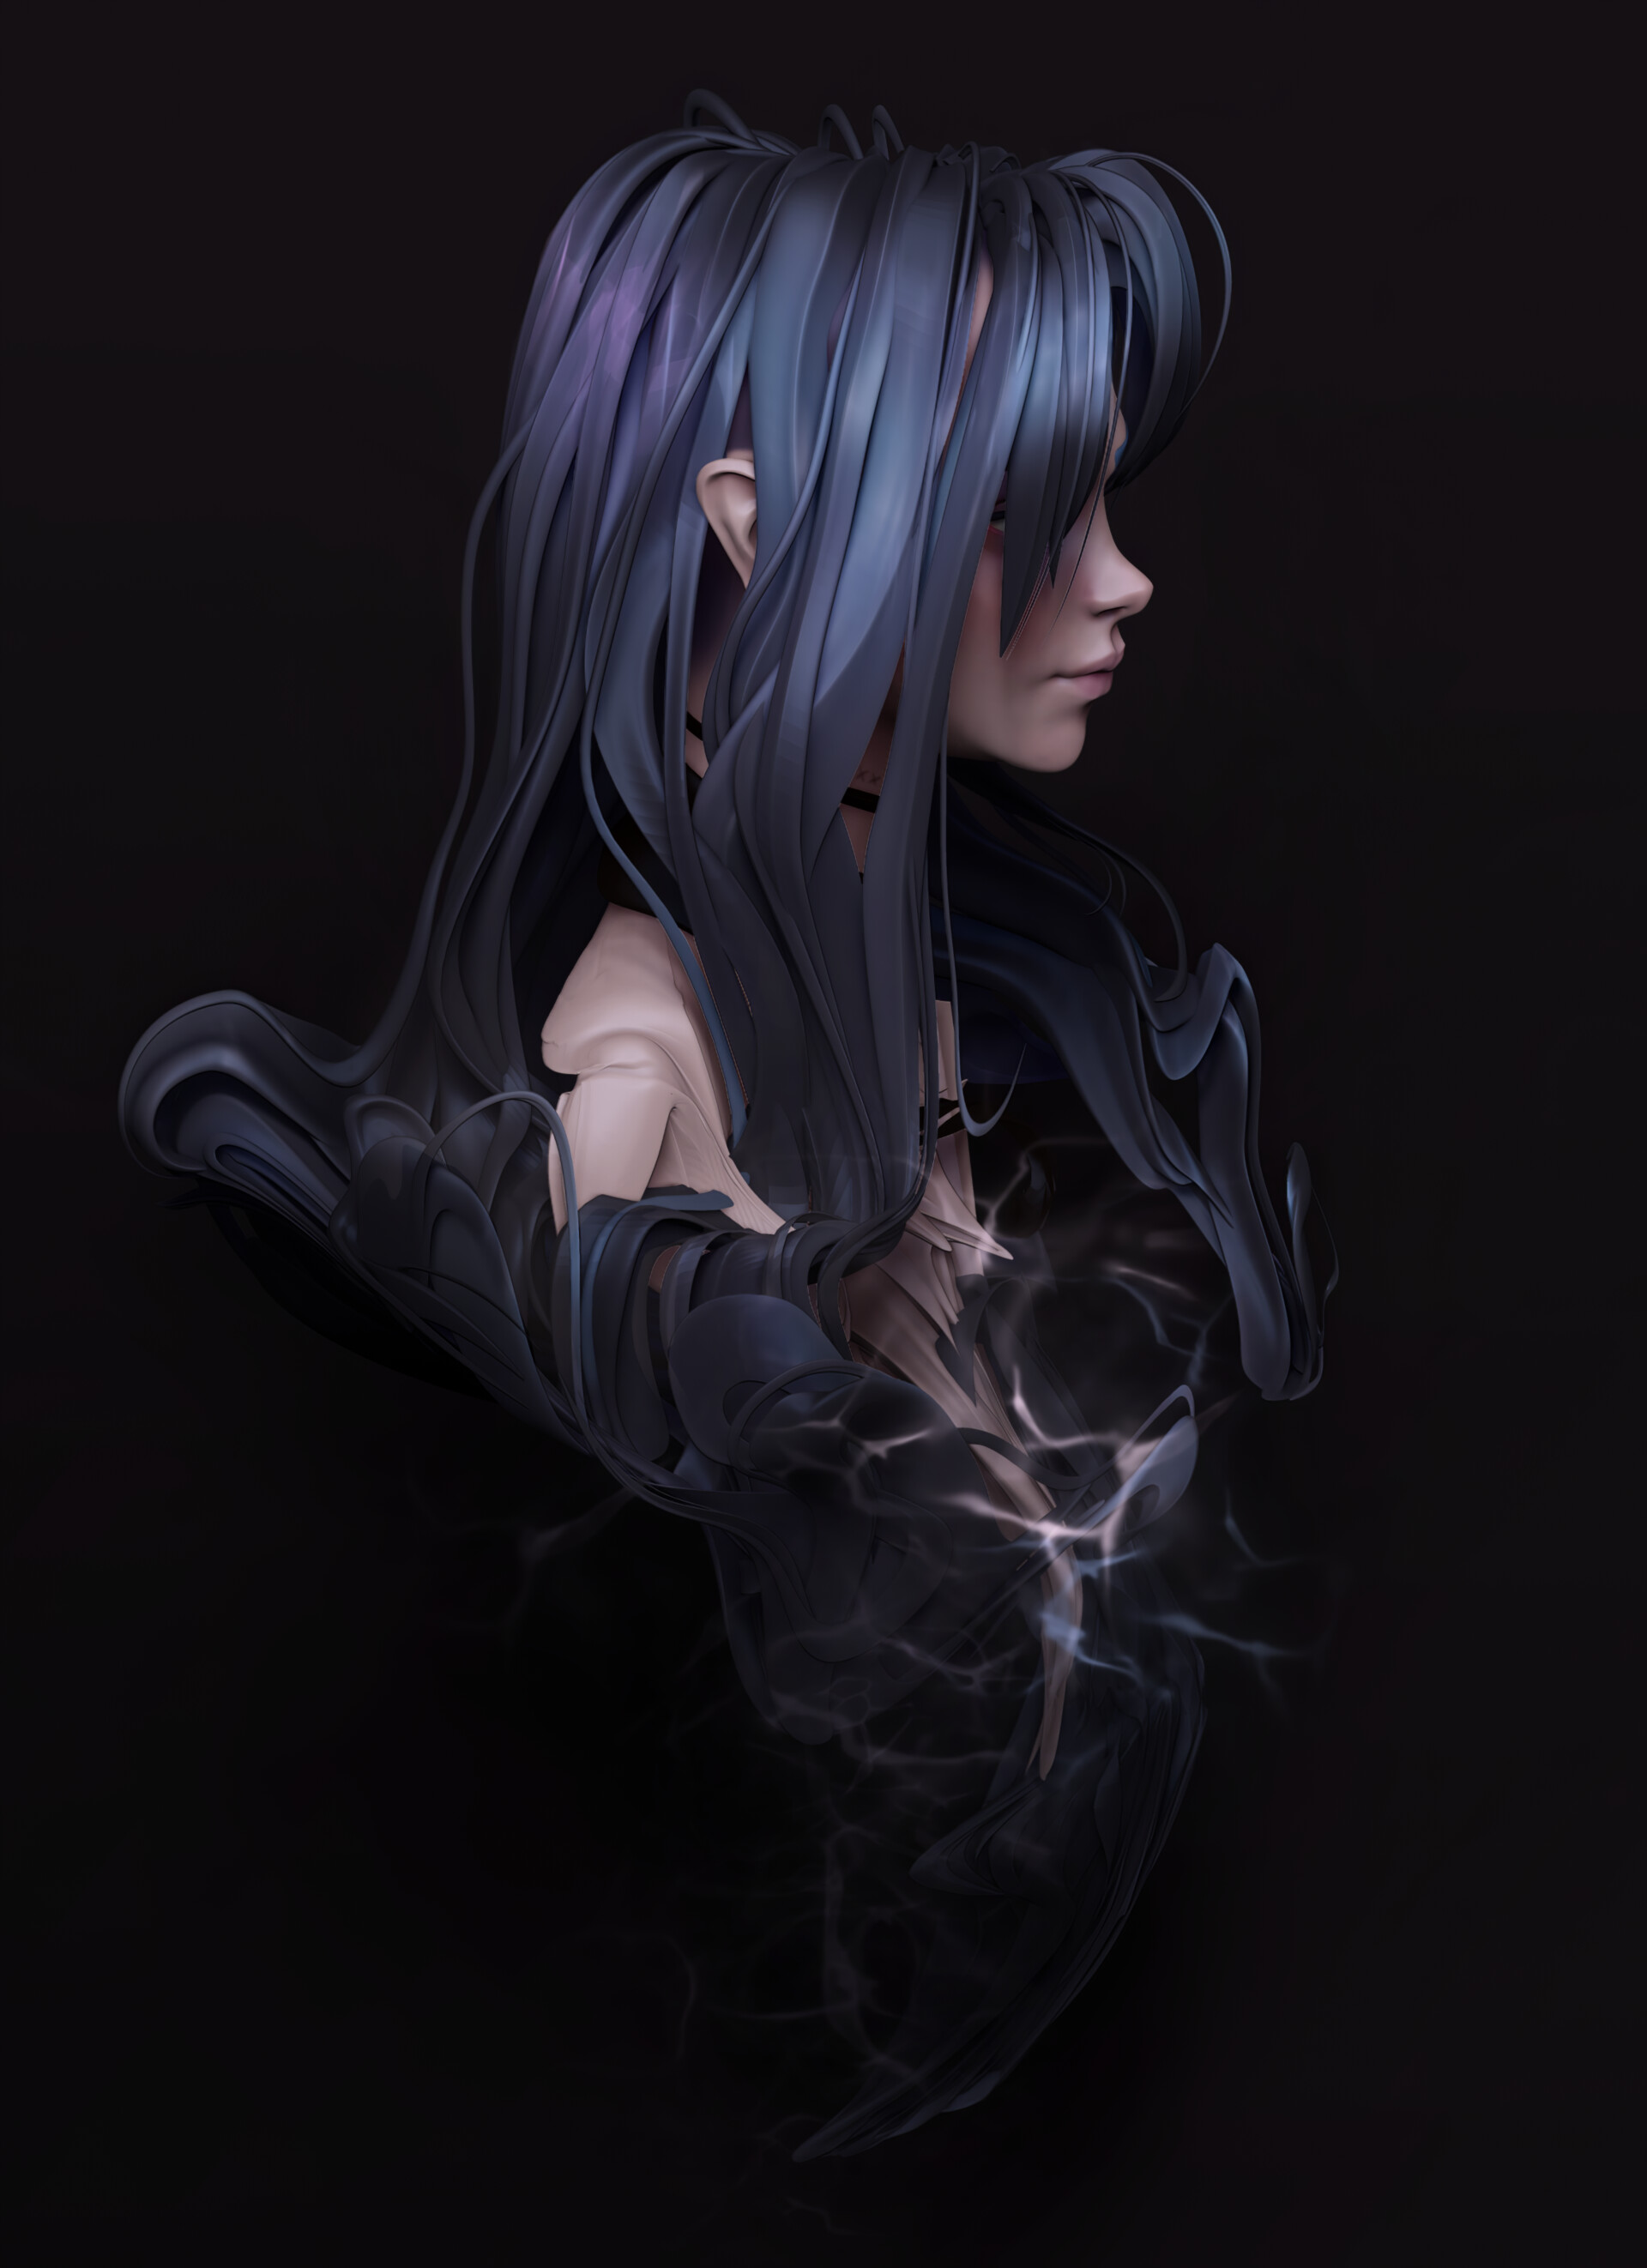 Raven princess of darkness